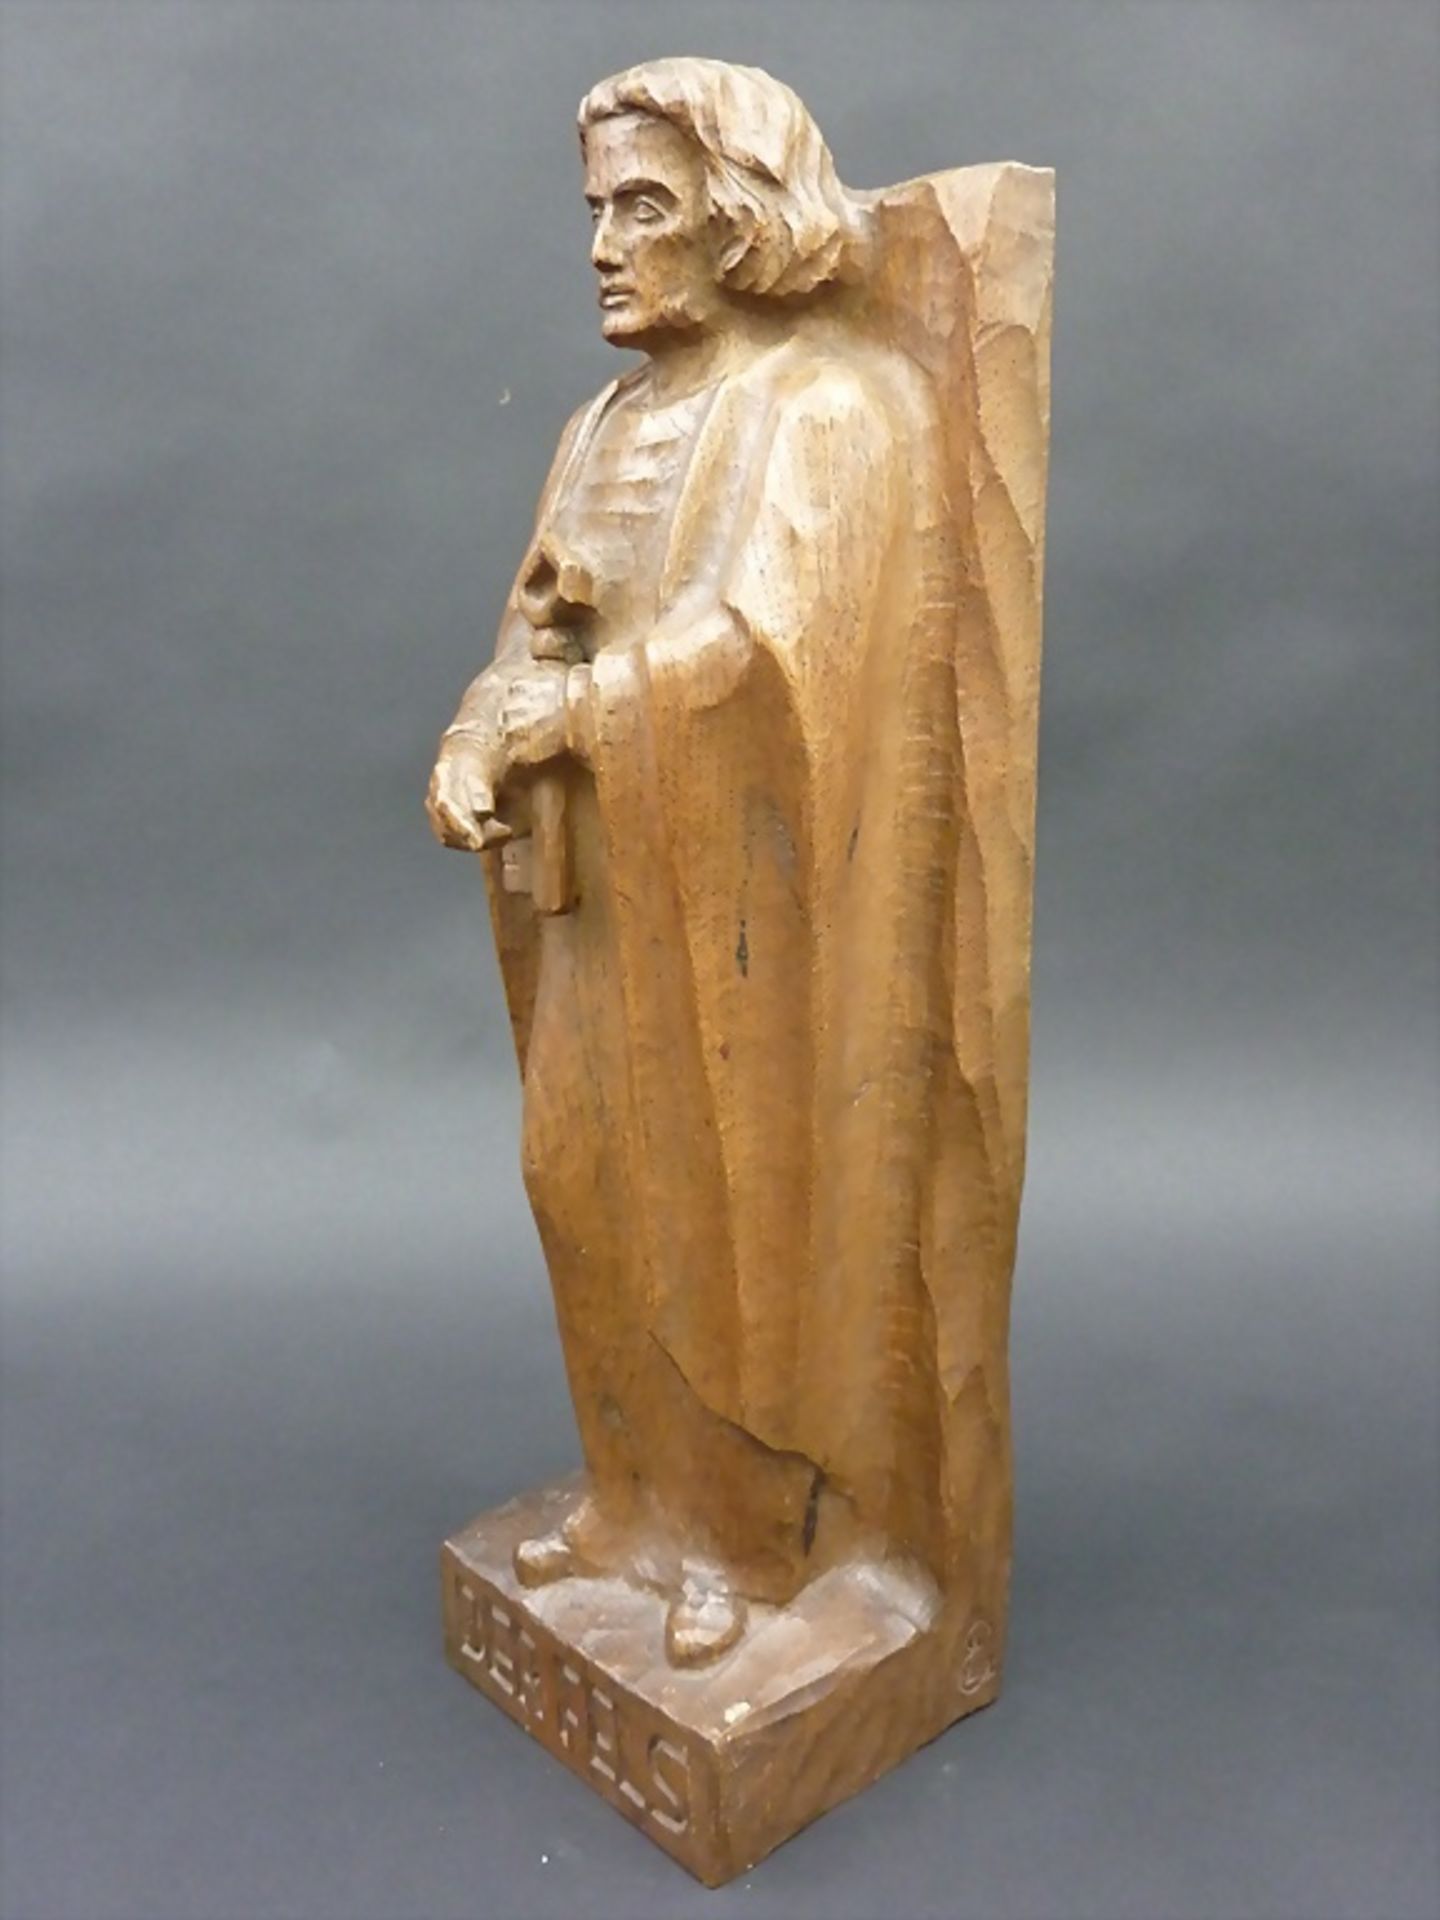 Holz-Skulptur 'Heiliger Apostel Petrus - Der Fels' / Wooden sculpture 'Holy Apostle Peter - ... - Bild 3 aus 12